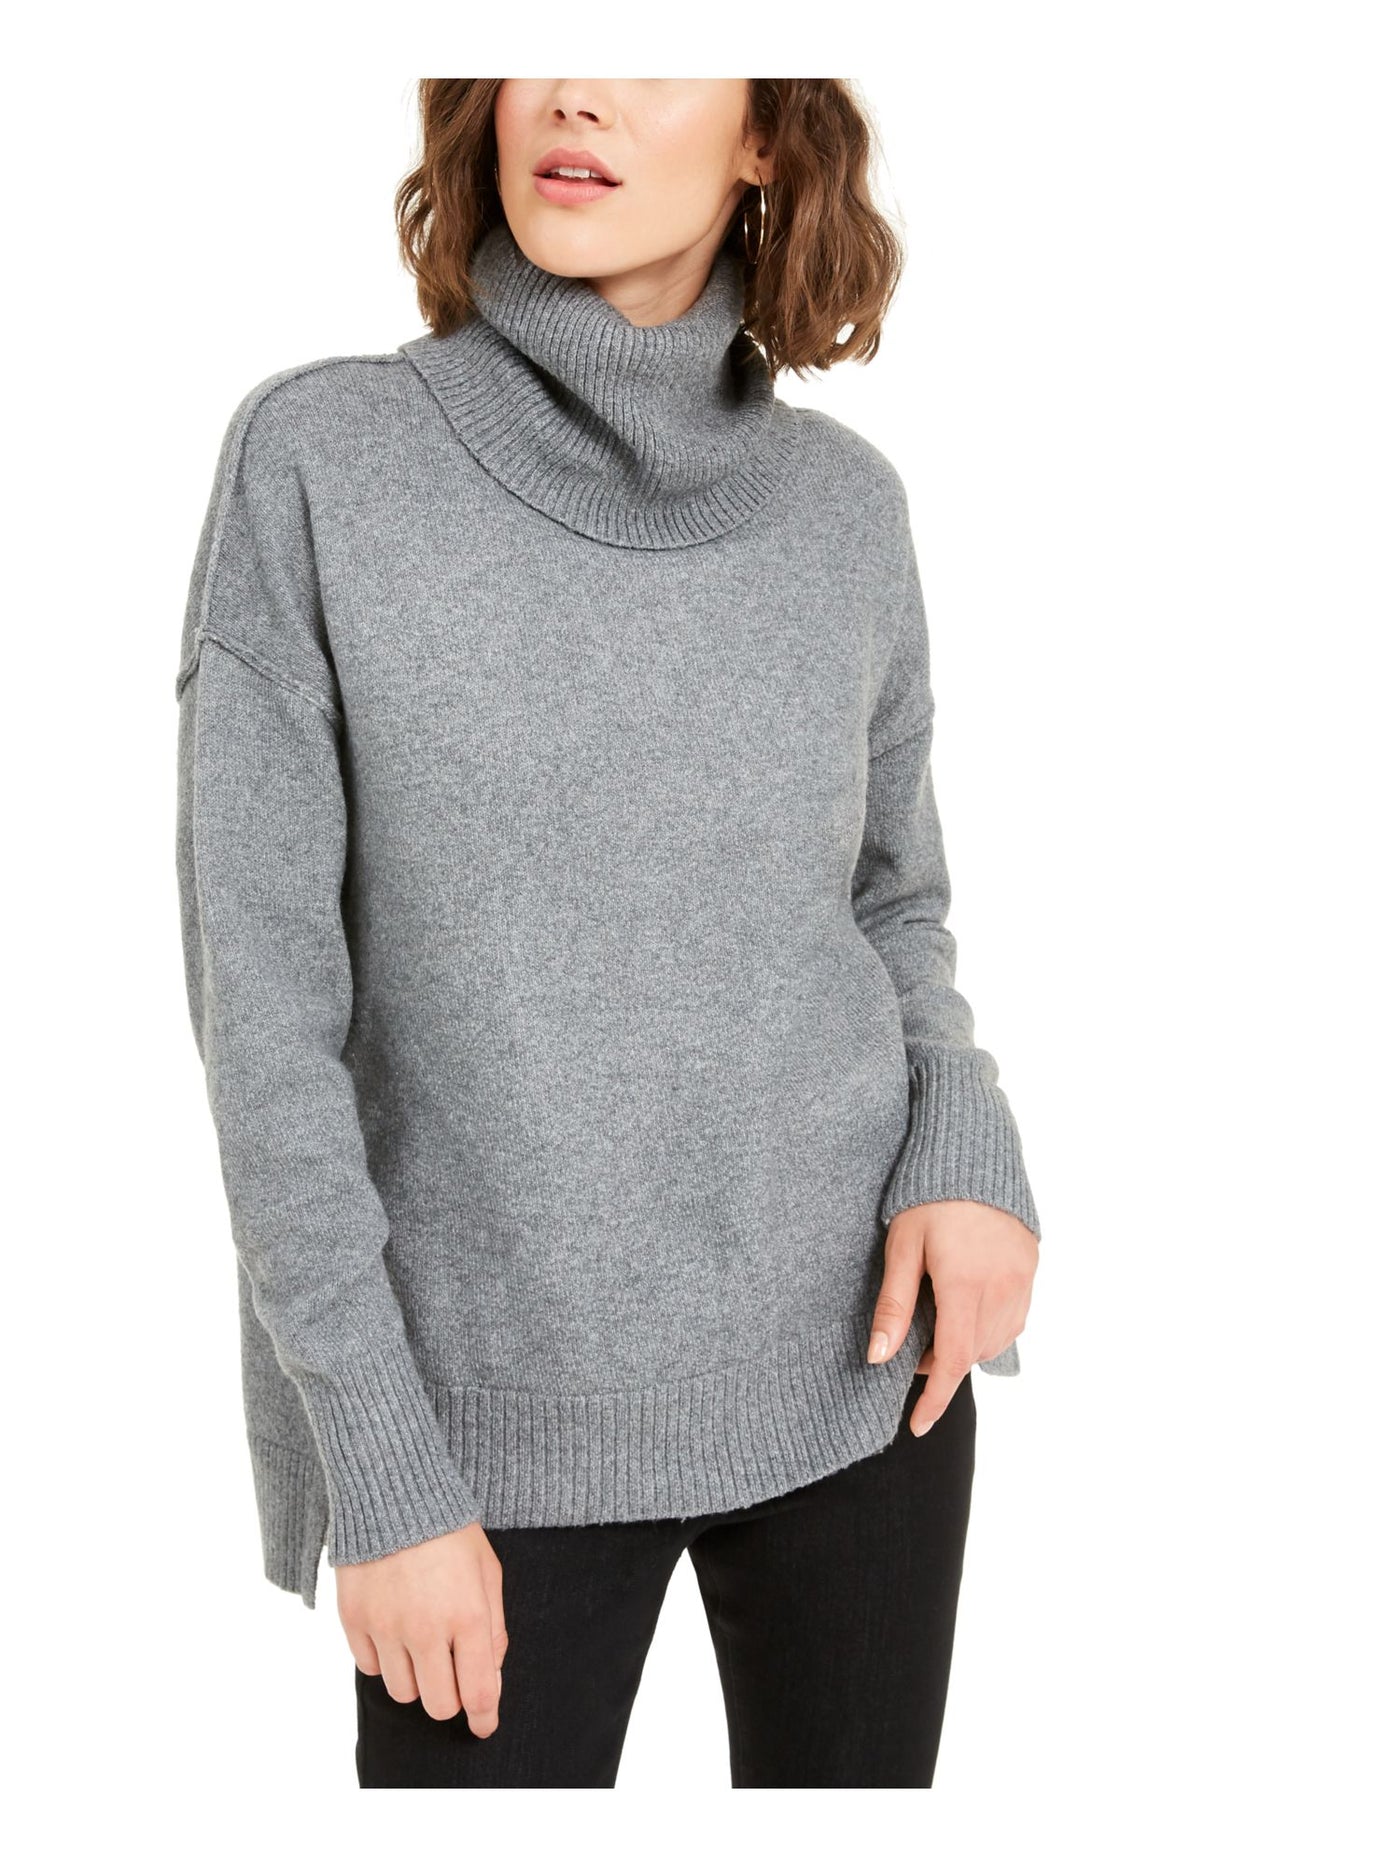 BELLA TILLY X BAR III Womens Gray Heather Long Sleeve Turtle Neck Sweater S